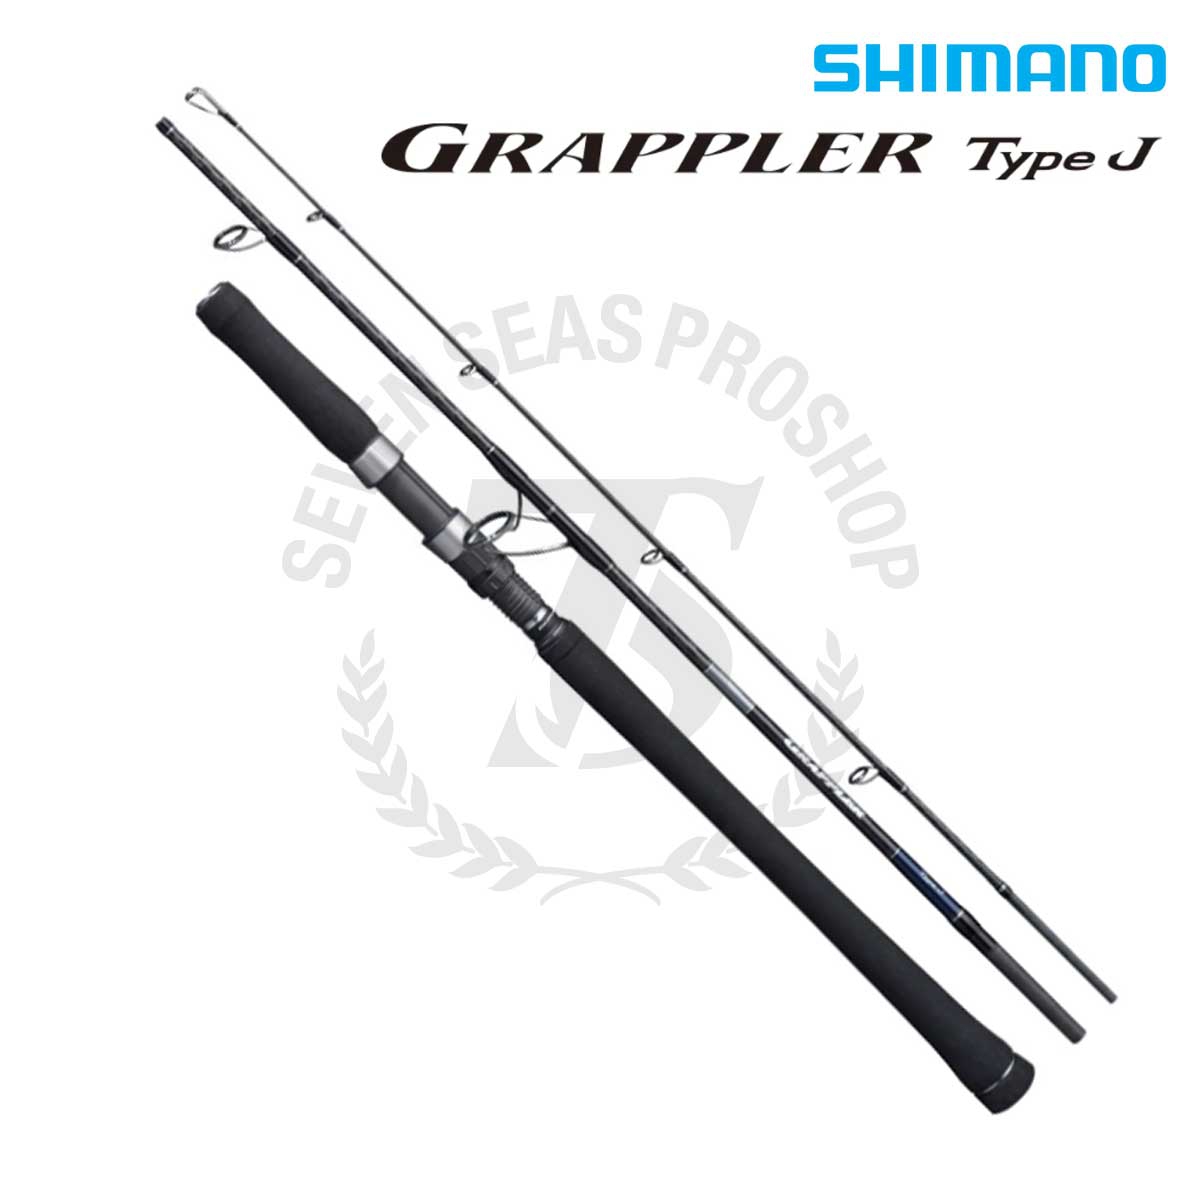 Shimano Grappler Type-J 3 Piece #S60-5/3 (Spinning) - 7 SEAS